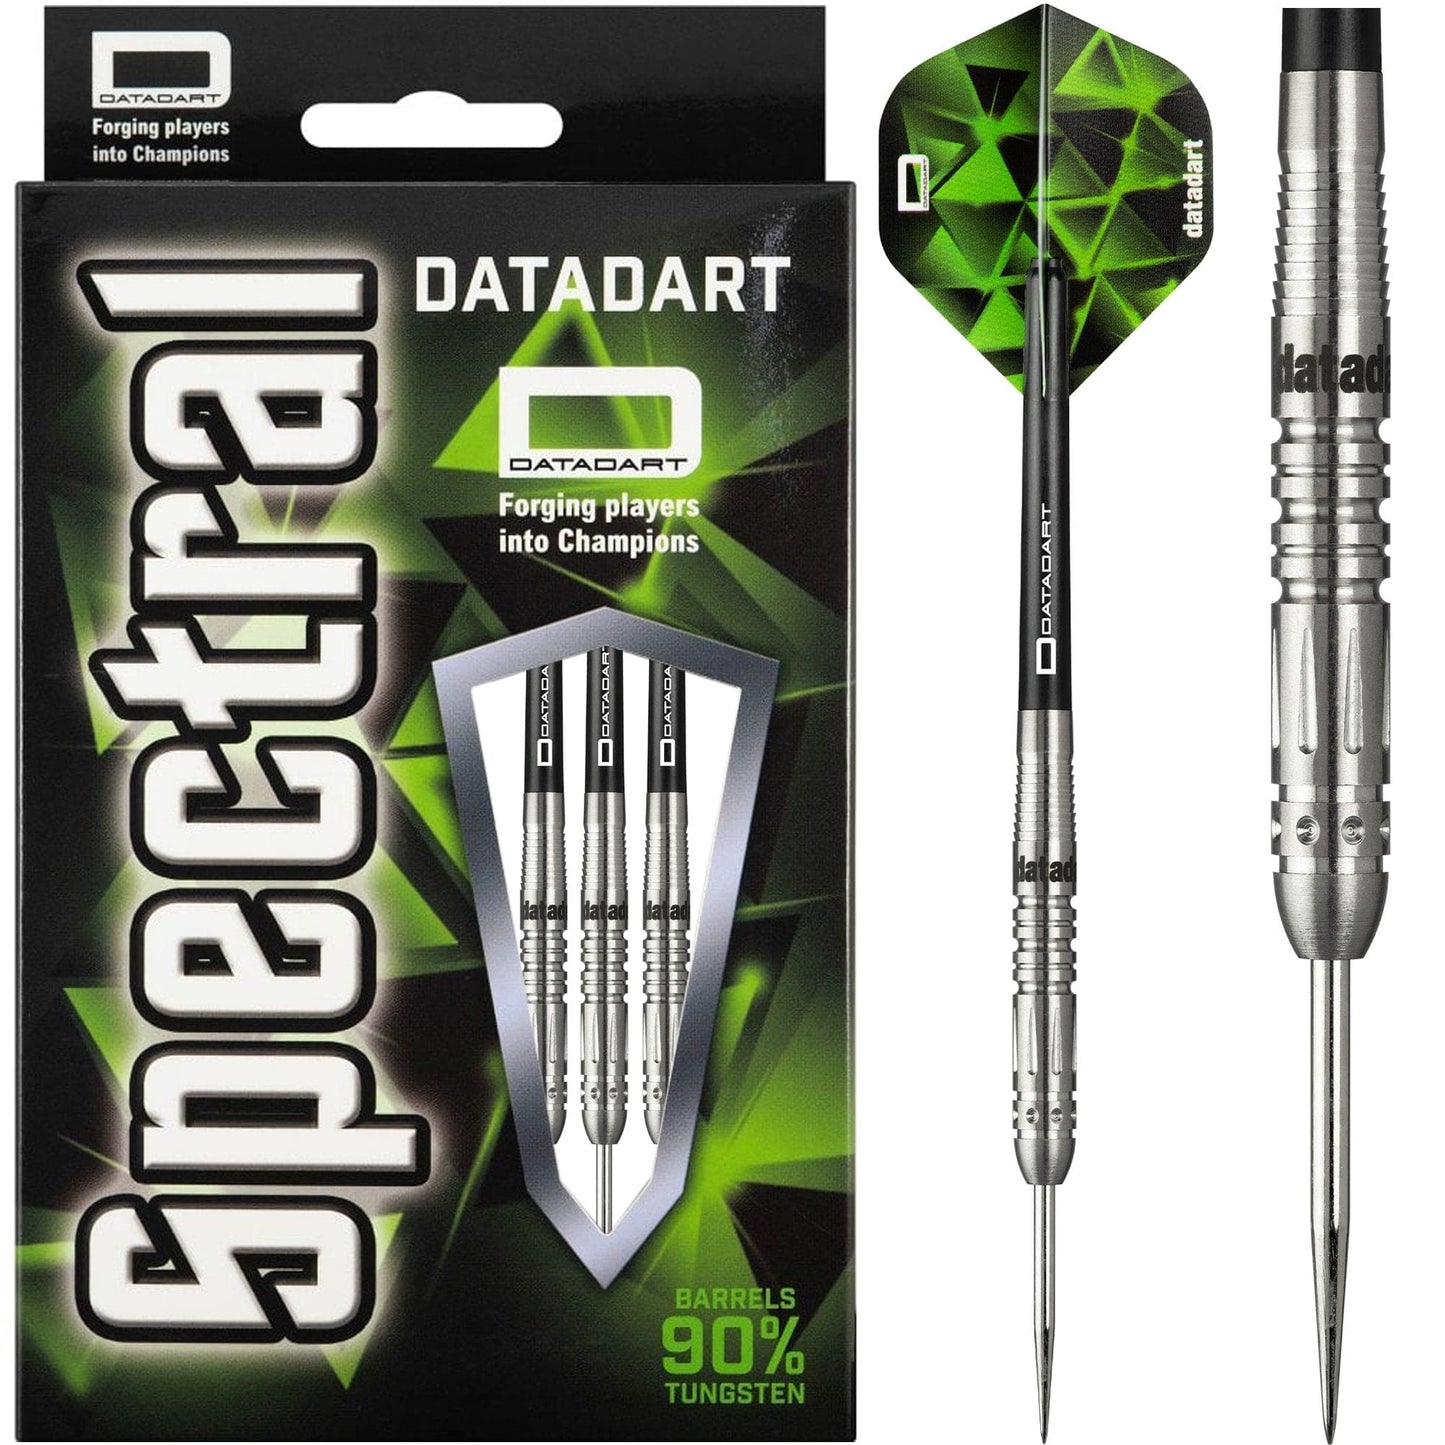 Datadart Spectral Darts - Steel Tip 23g